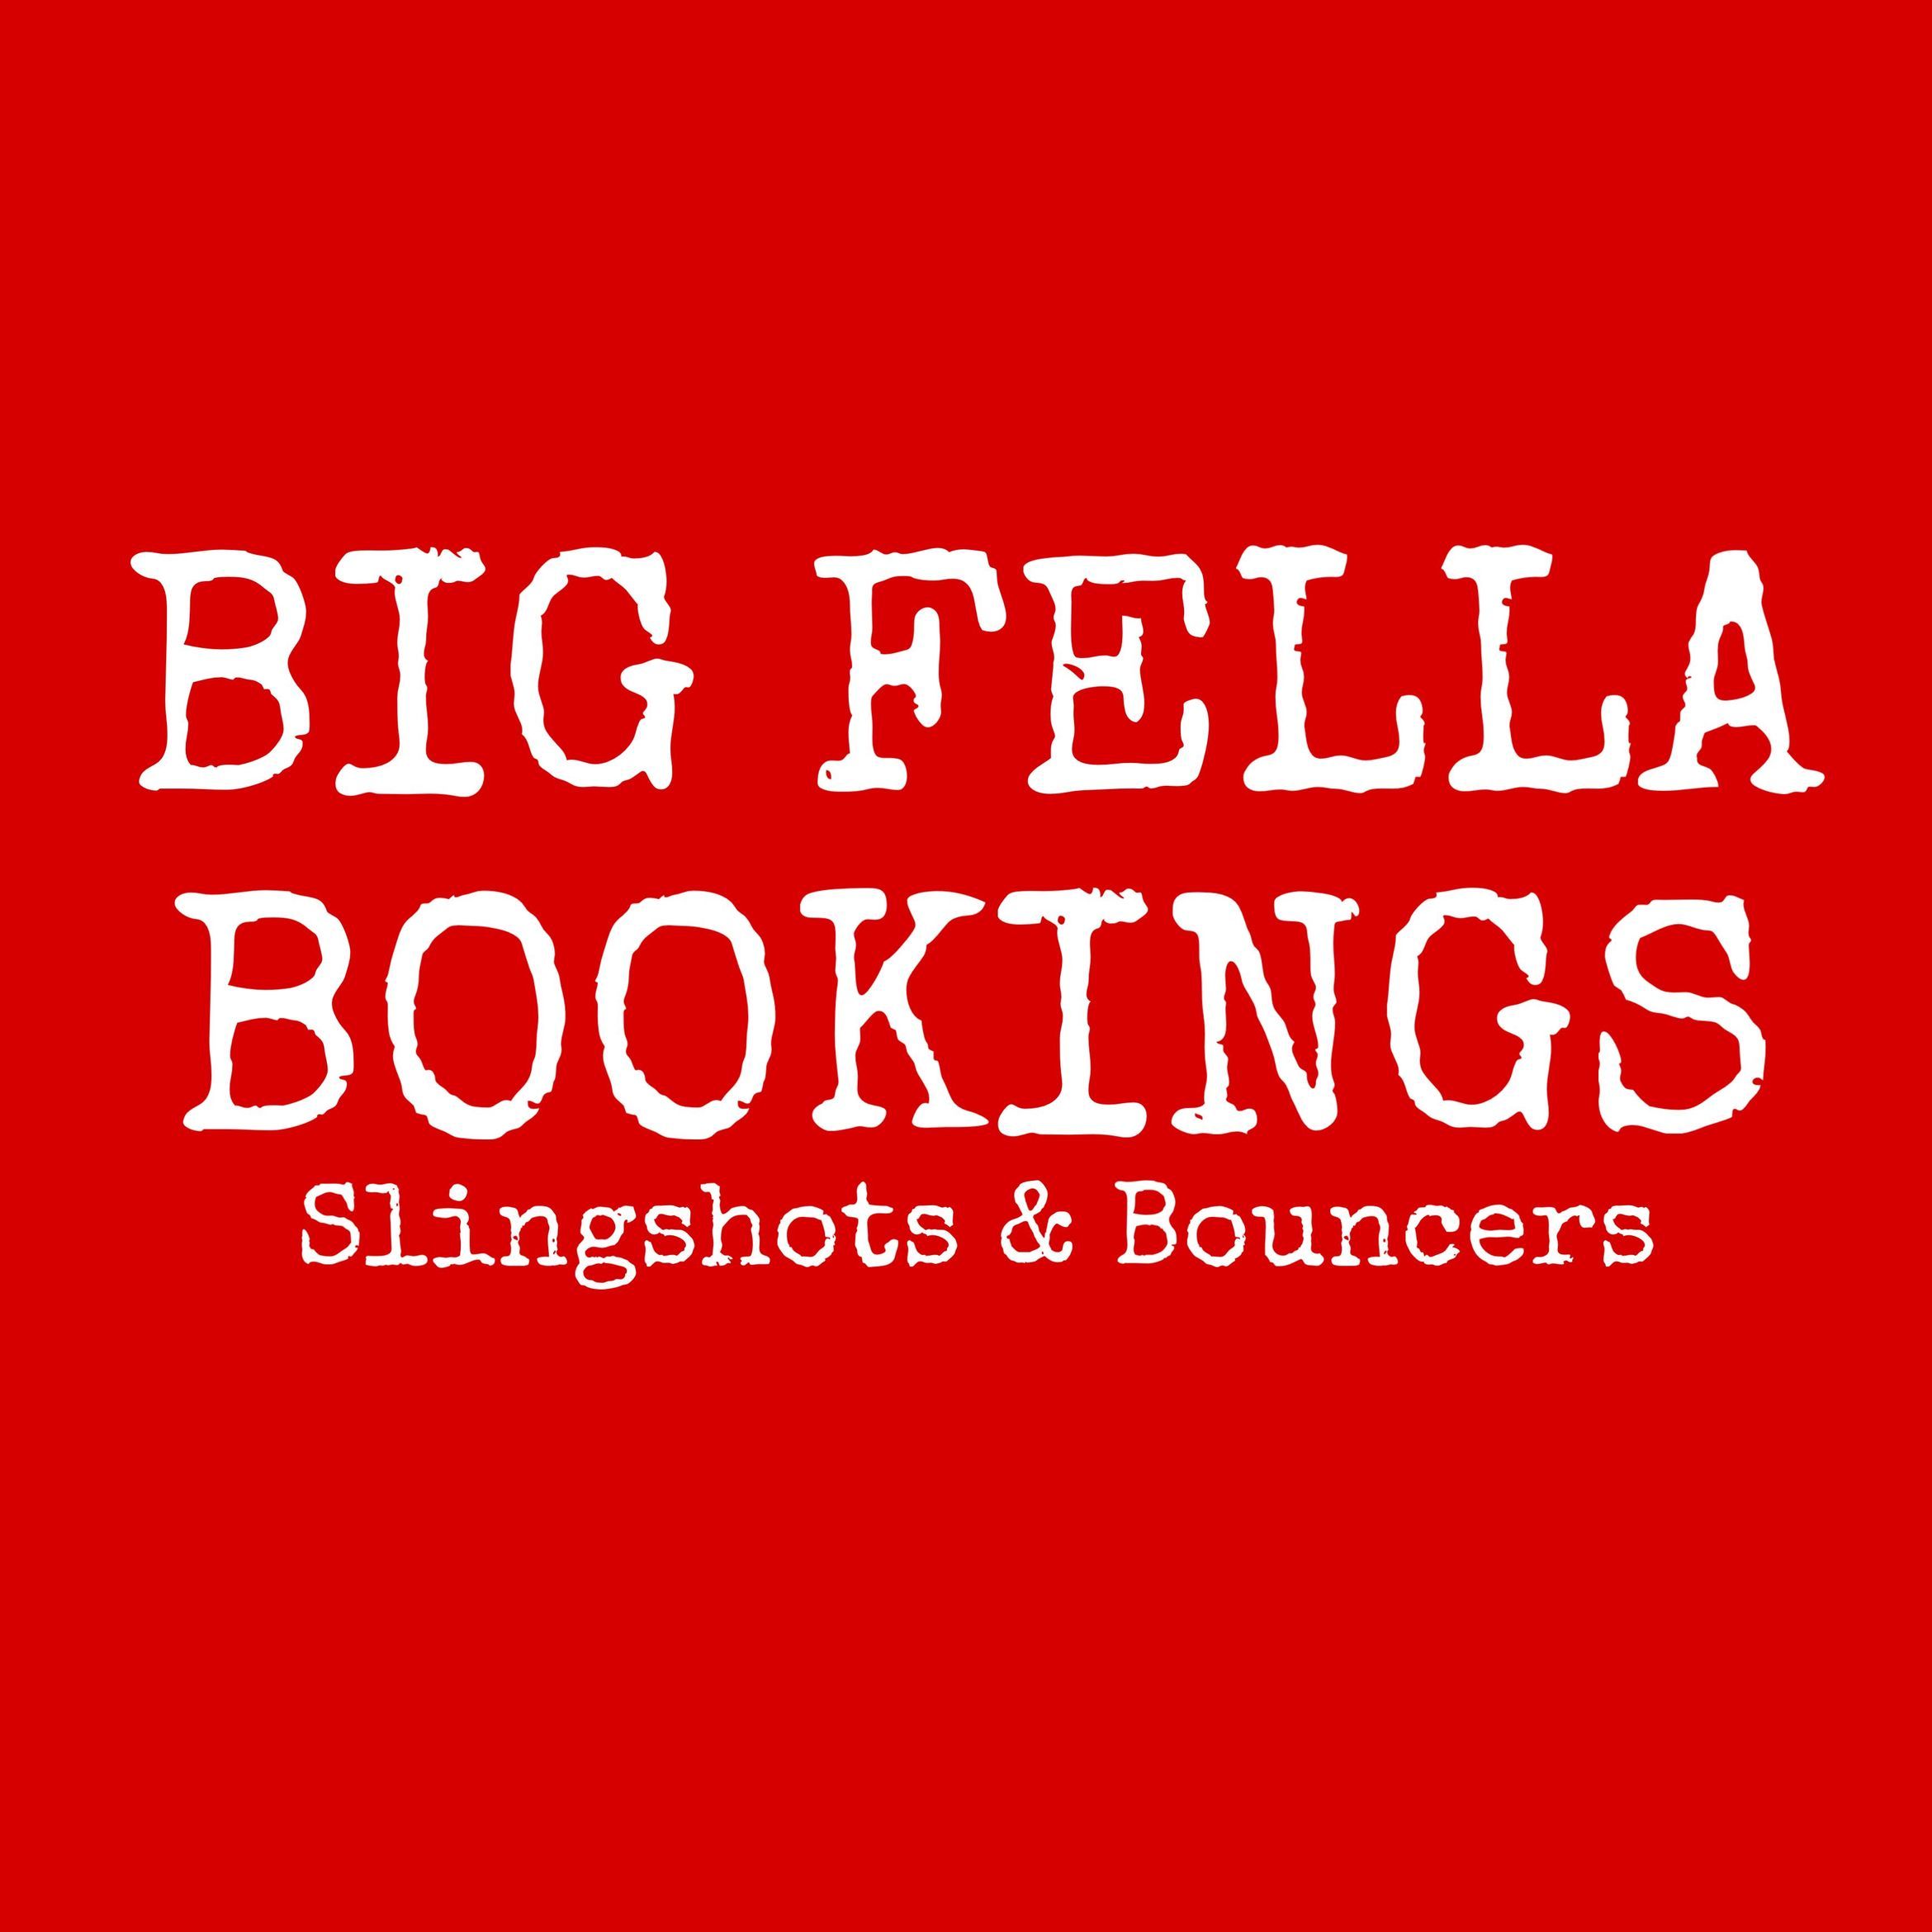 Big Fella Bookings, 665 pear orchard road, Ridgeland, 39157